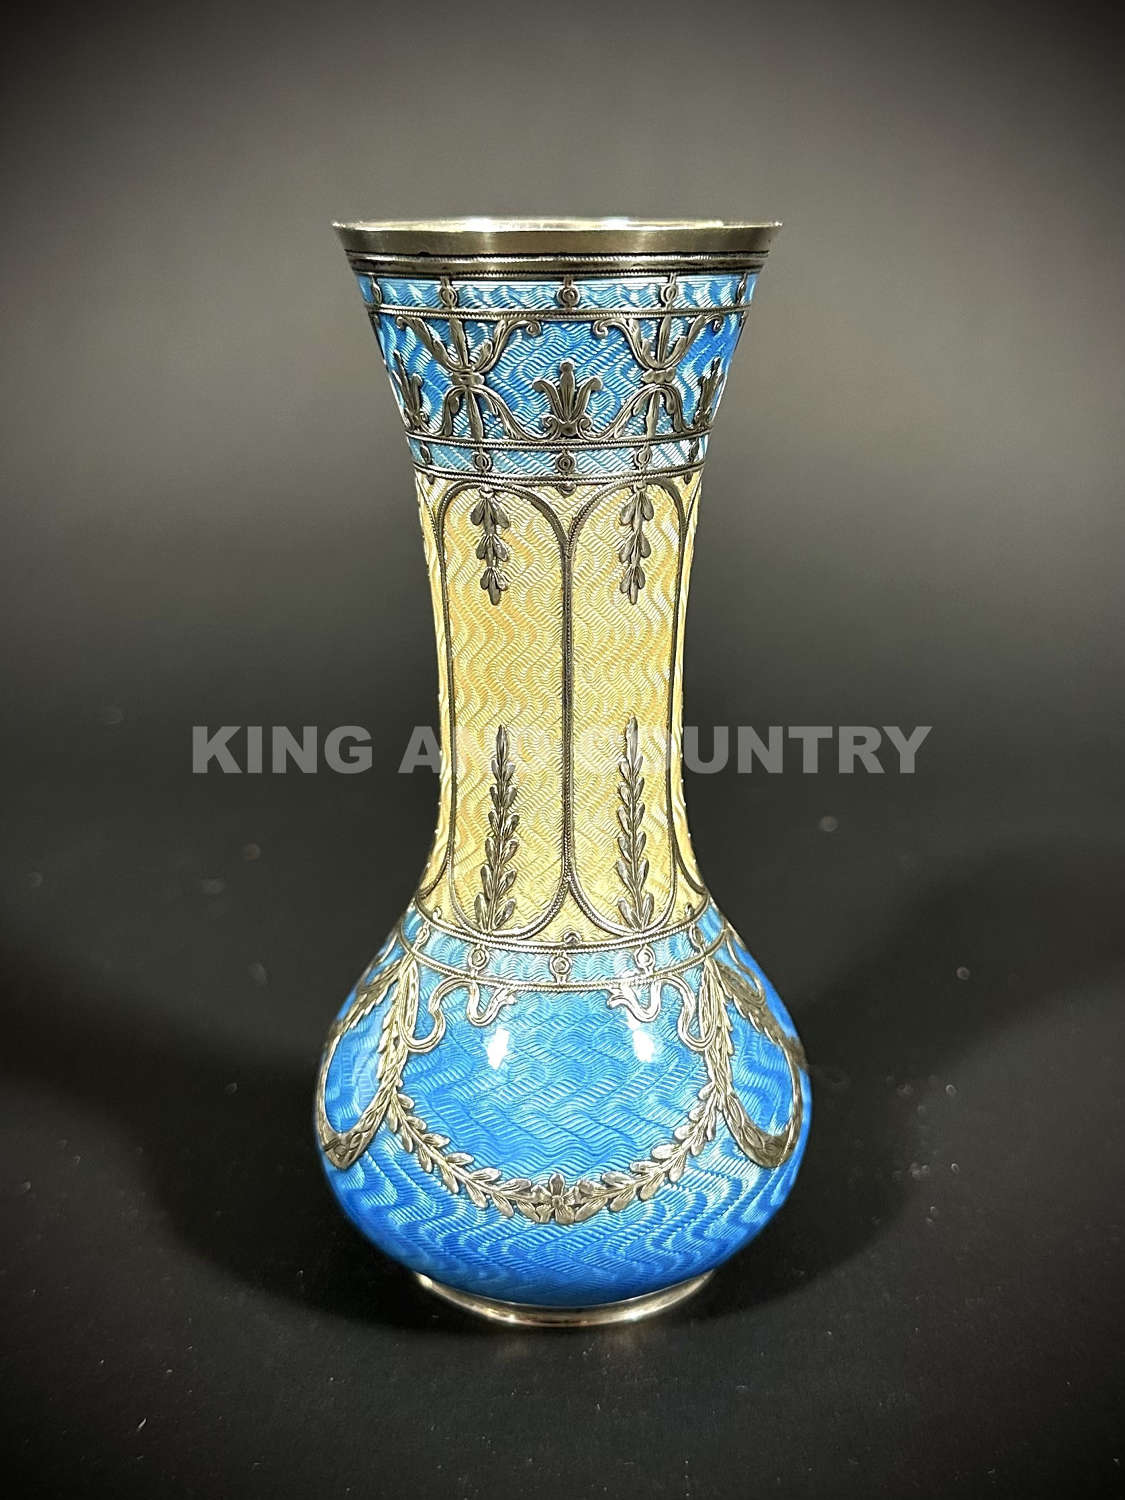 An Edwardian silver and Guilloche enamel bud vase